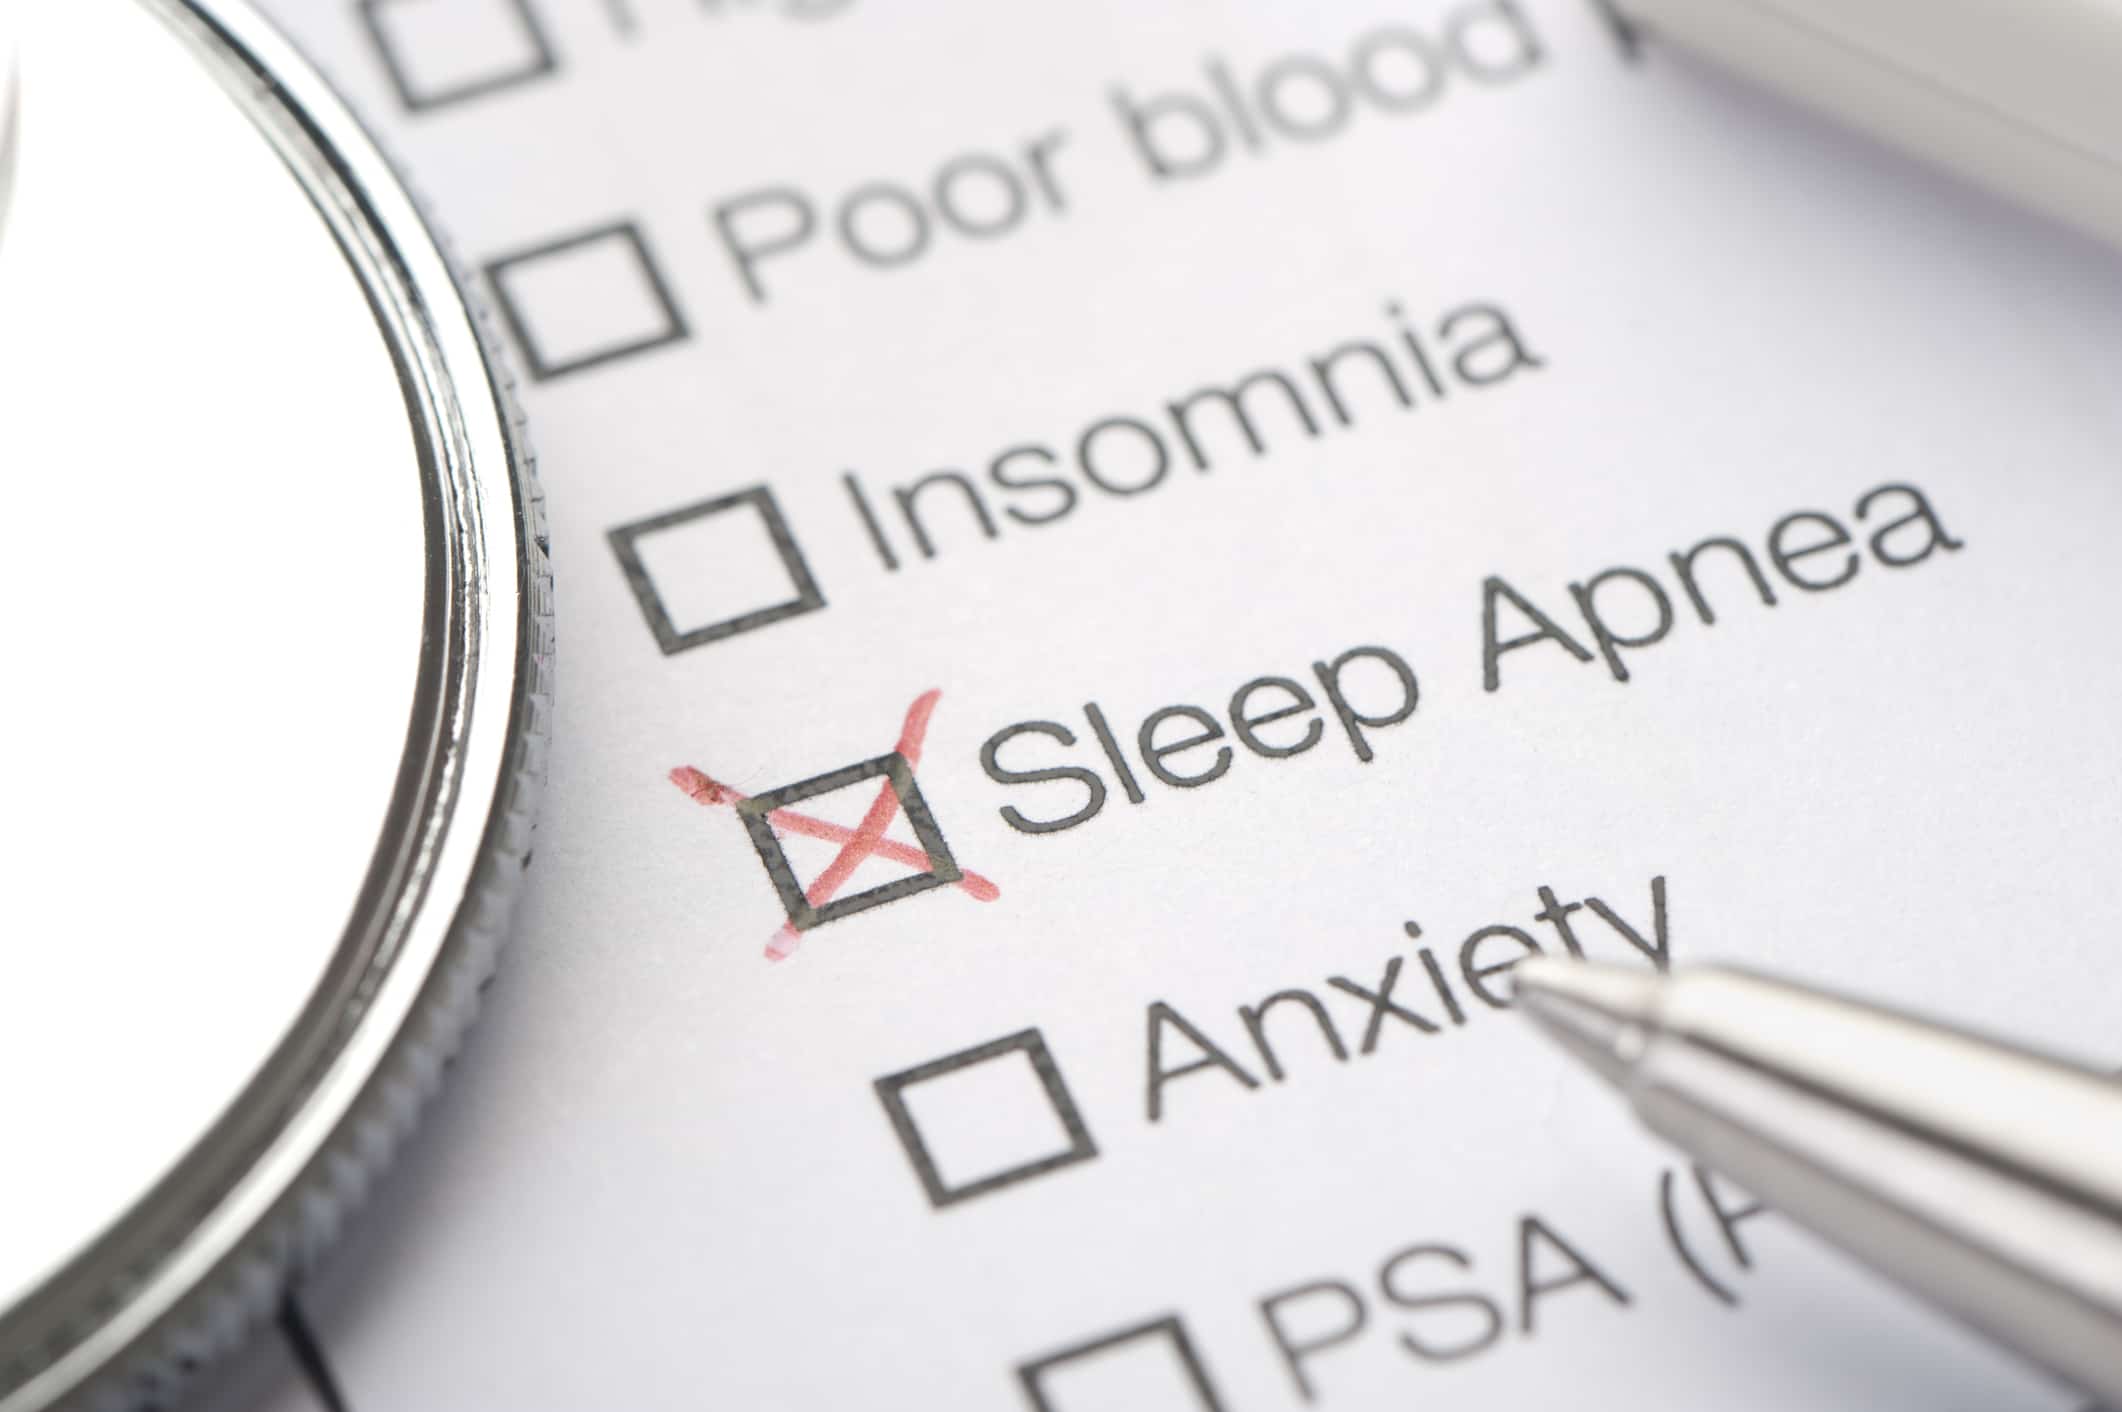 VA Sleep Apnea Eligibility